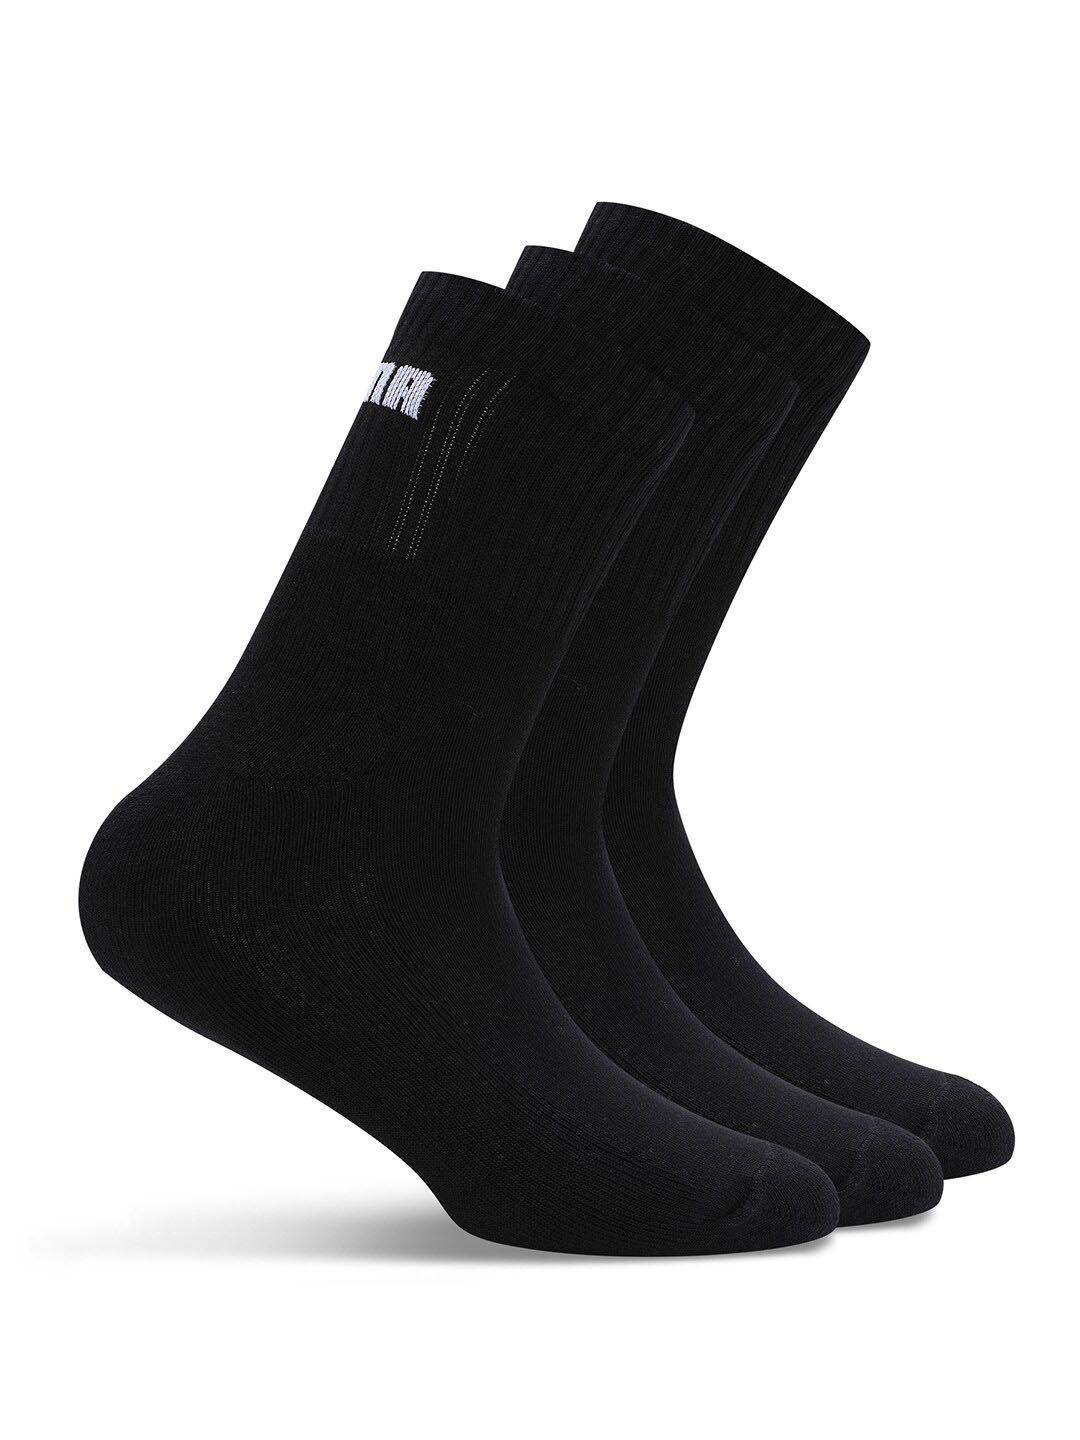 puma-unisex-pack-of-3-calf-length-cotton-socks